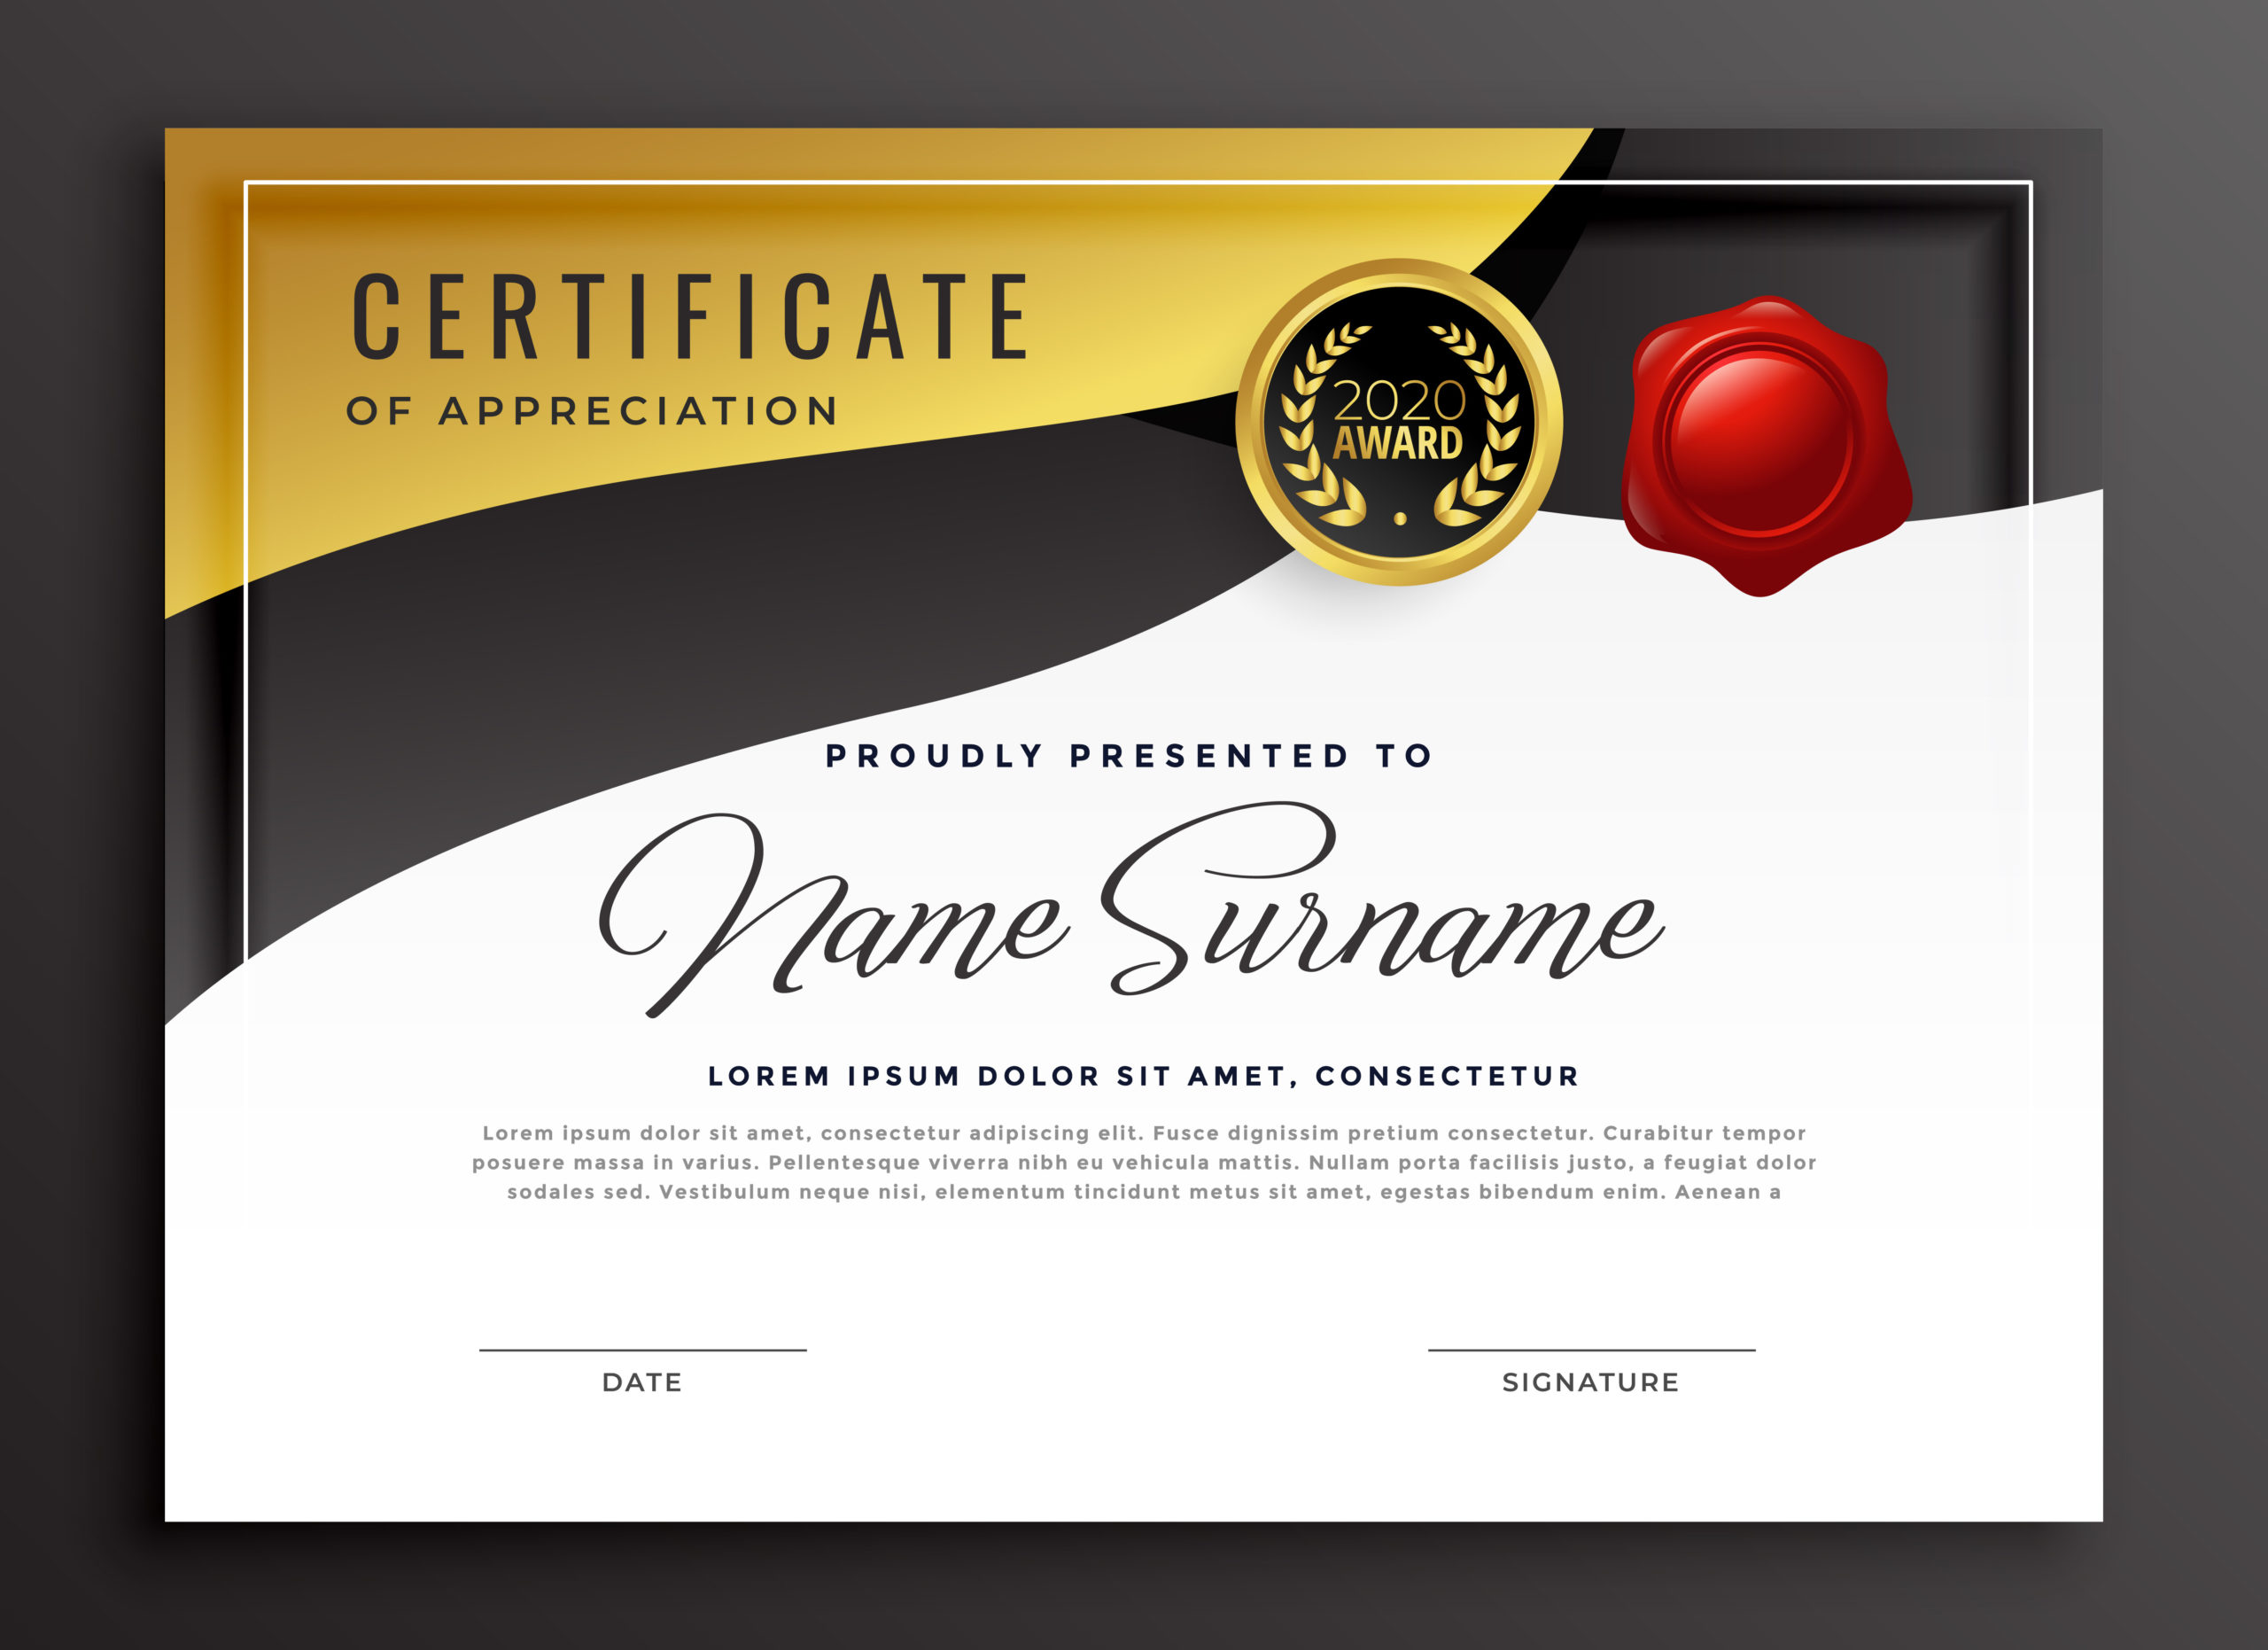 Golden Certificate Of Appreciation Template Download Within Certificate Of Appreciation Template Doc